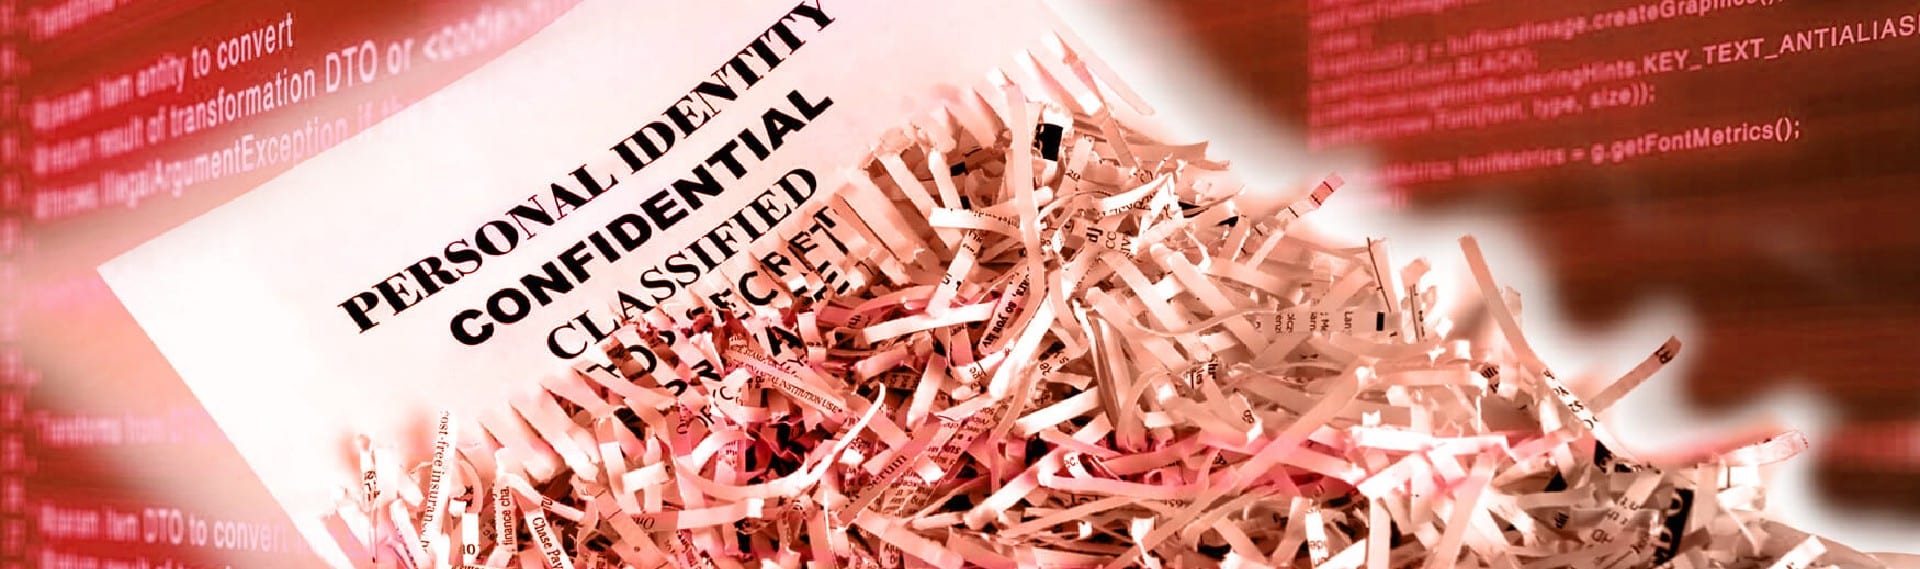 Secure paper shredding image dd - hard drive shredding | secure paper shredding | hdd wiping